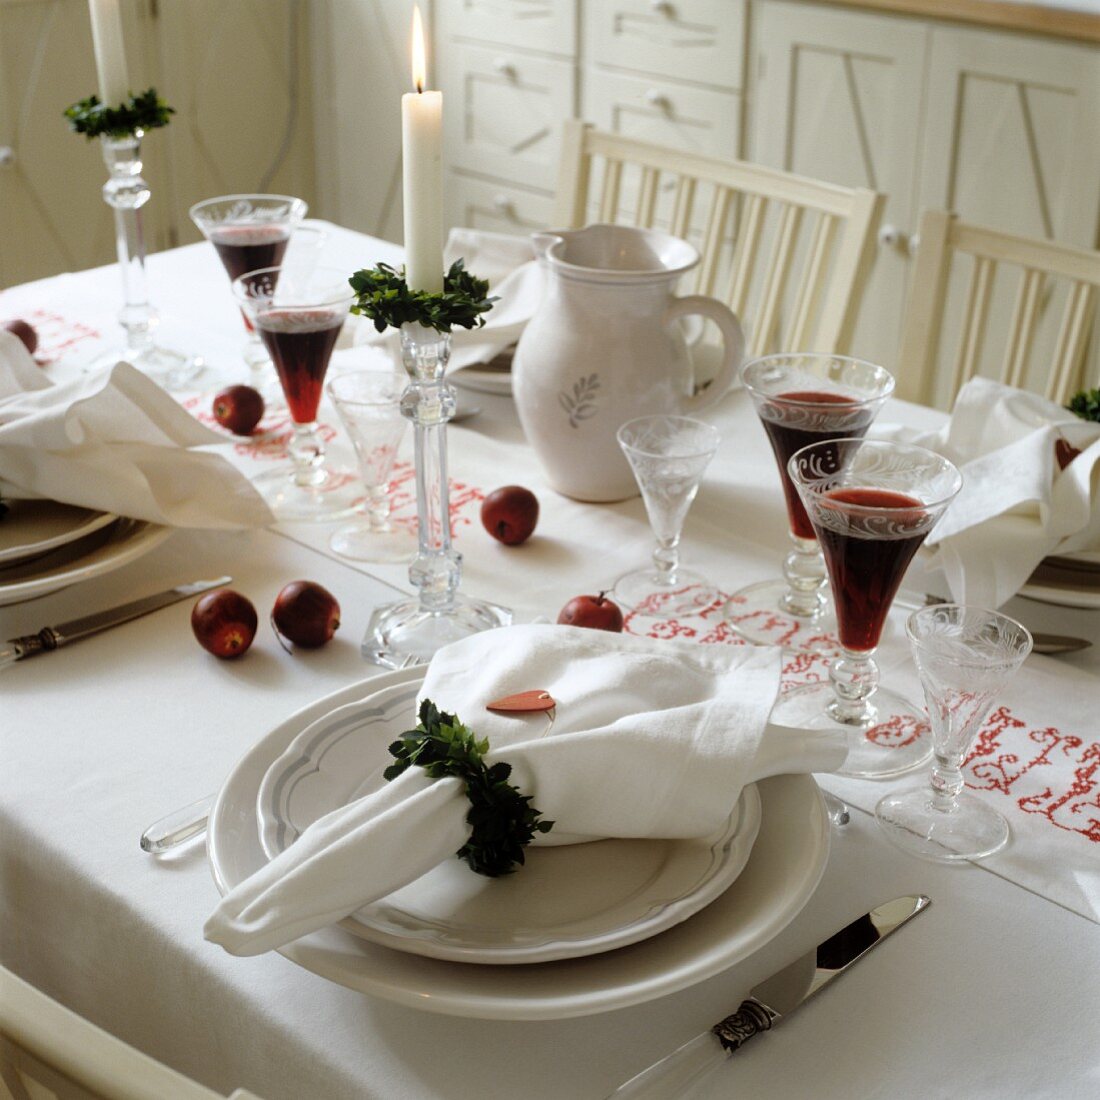 Wreaths of leaves as linen napkins on festively set table